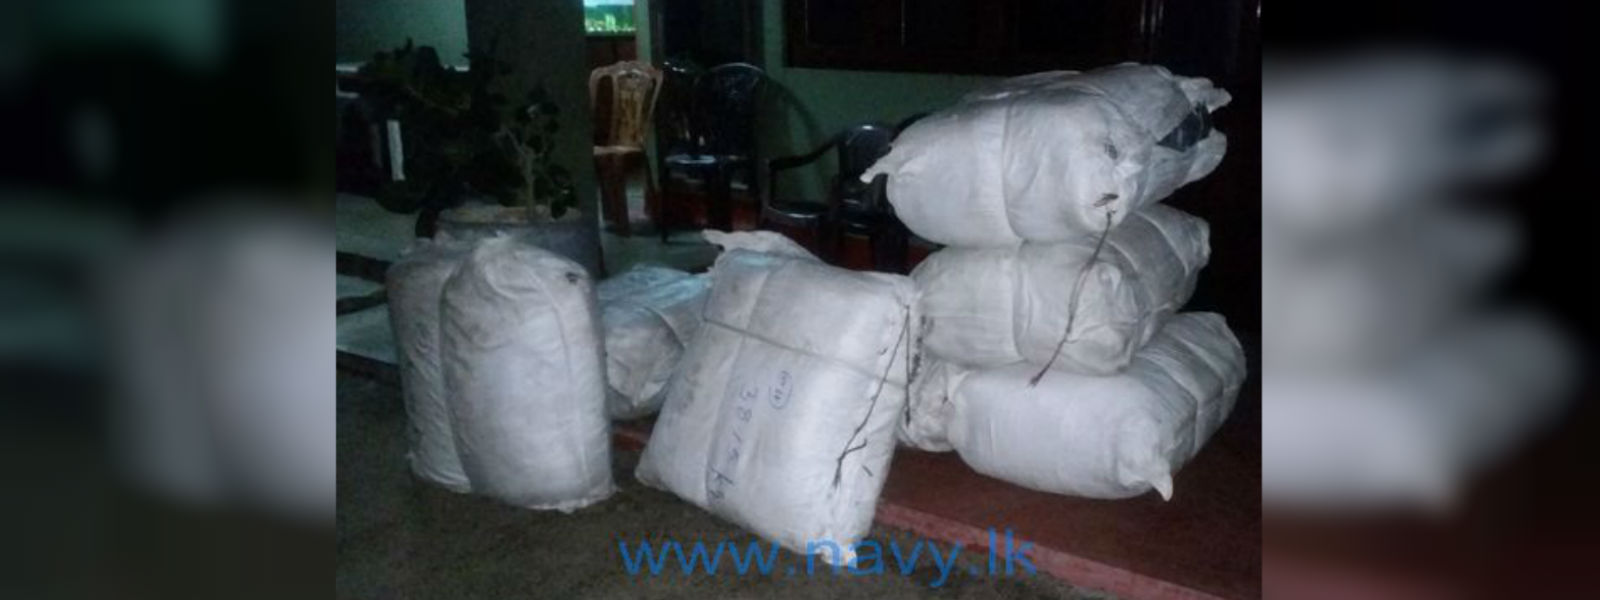 335.7kg of beedi leaves recovered in Jaffna